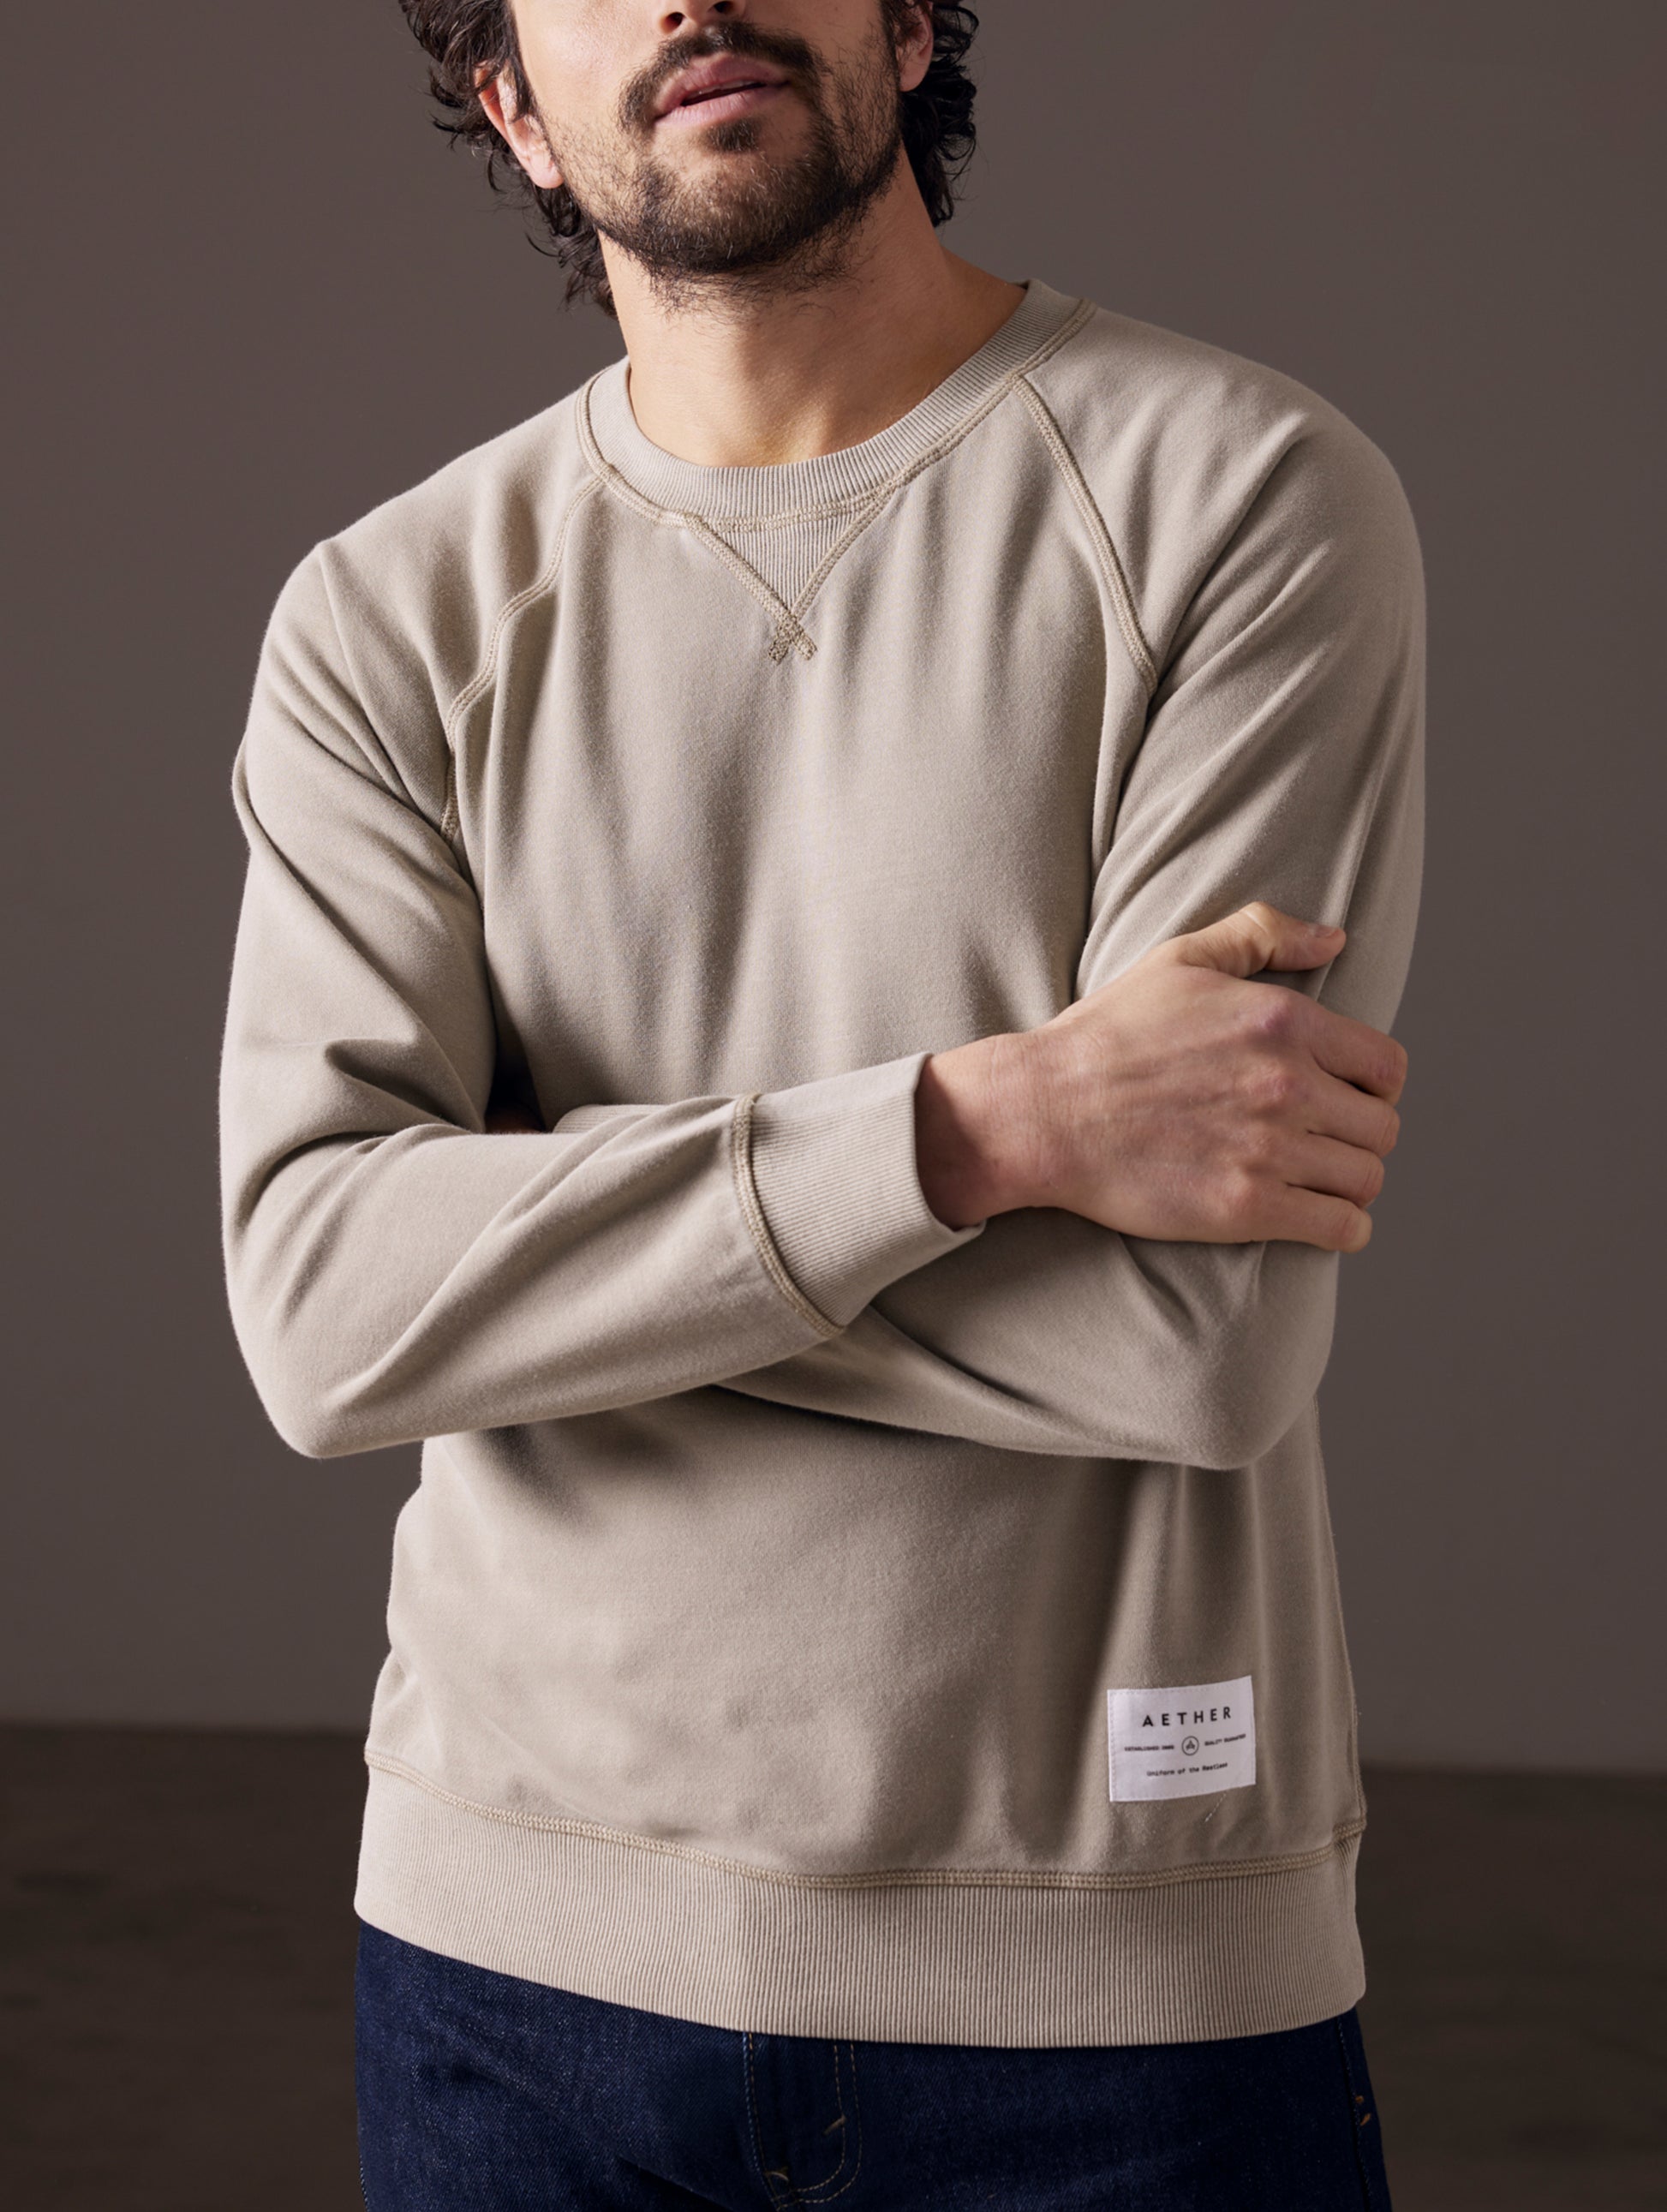 Man wearing light grey crew sweatshirt